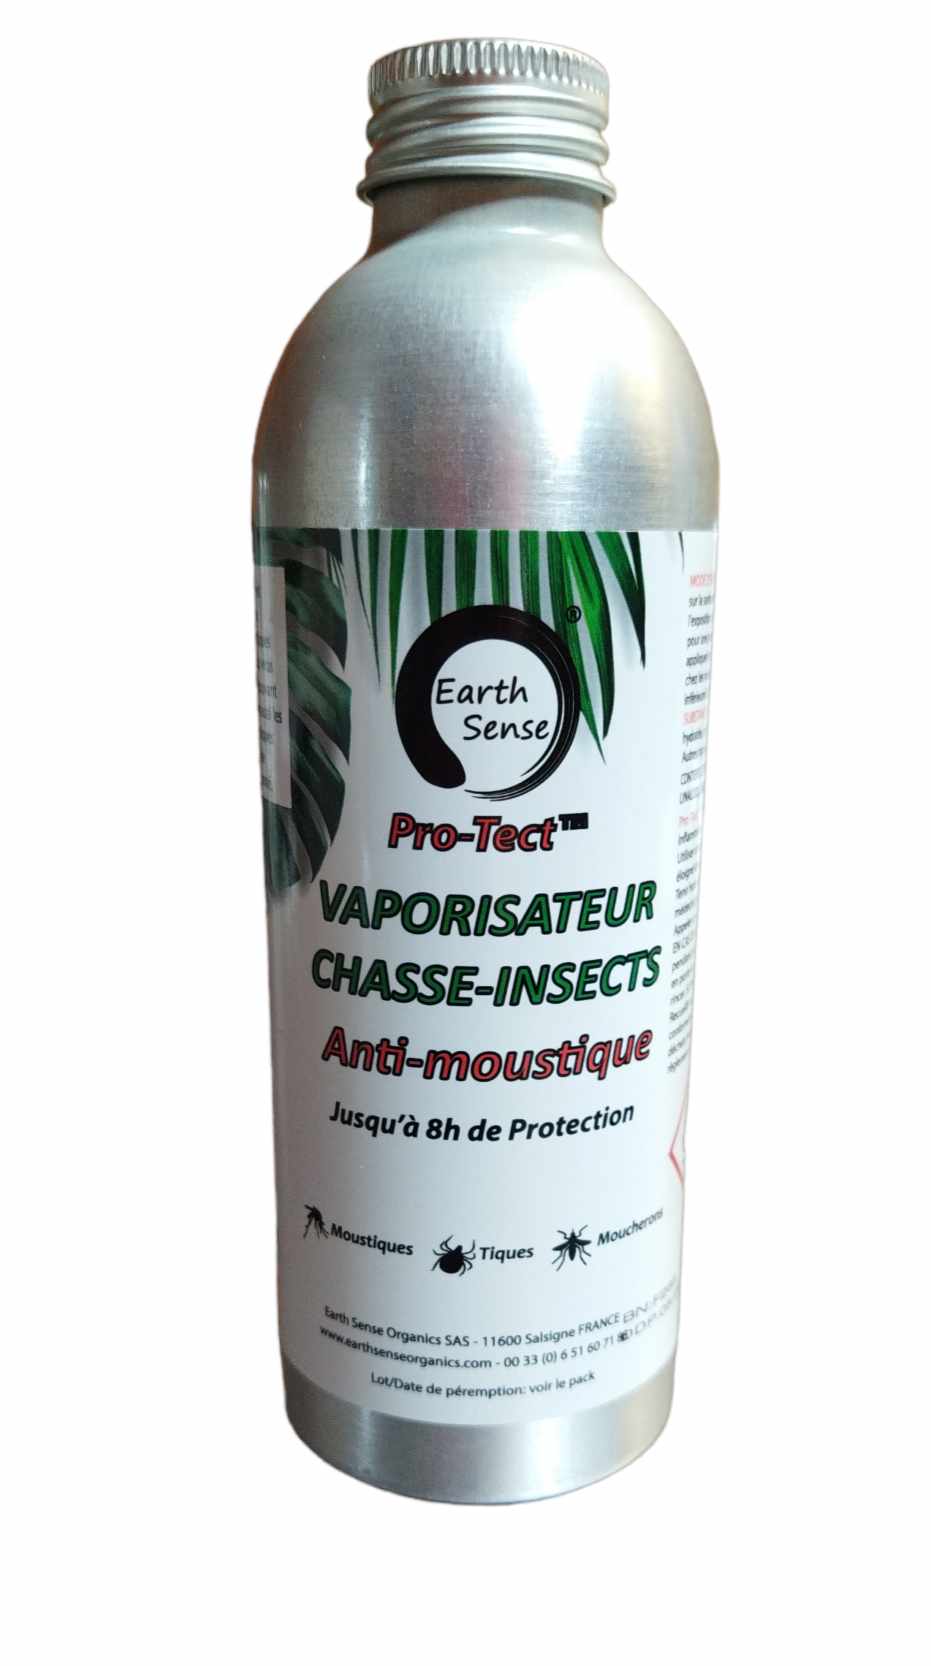 MEGA BUNDLE - 16 x 200ml Pro-Tect - Vaporisateur Chasse-Insects Anti Moustique - VEGAN - Family size - Earthsenseorganics